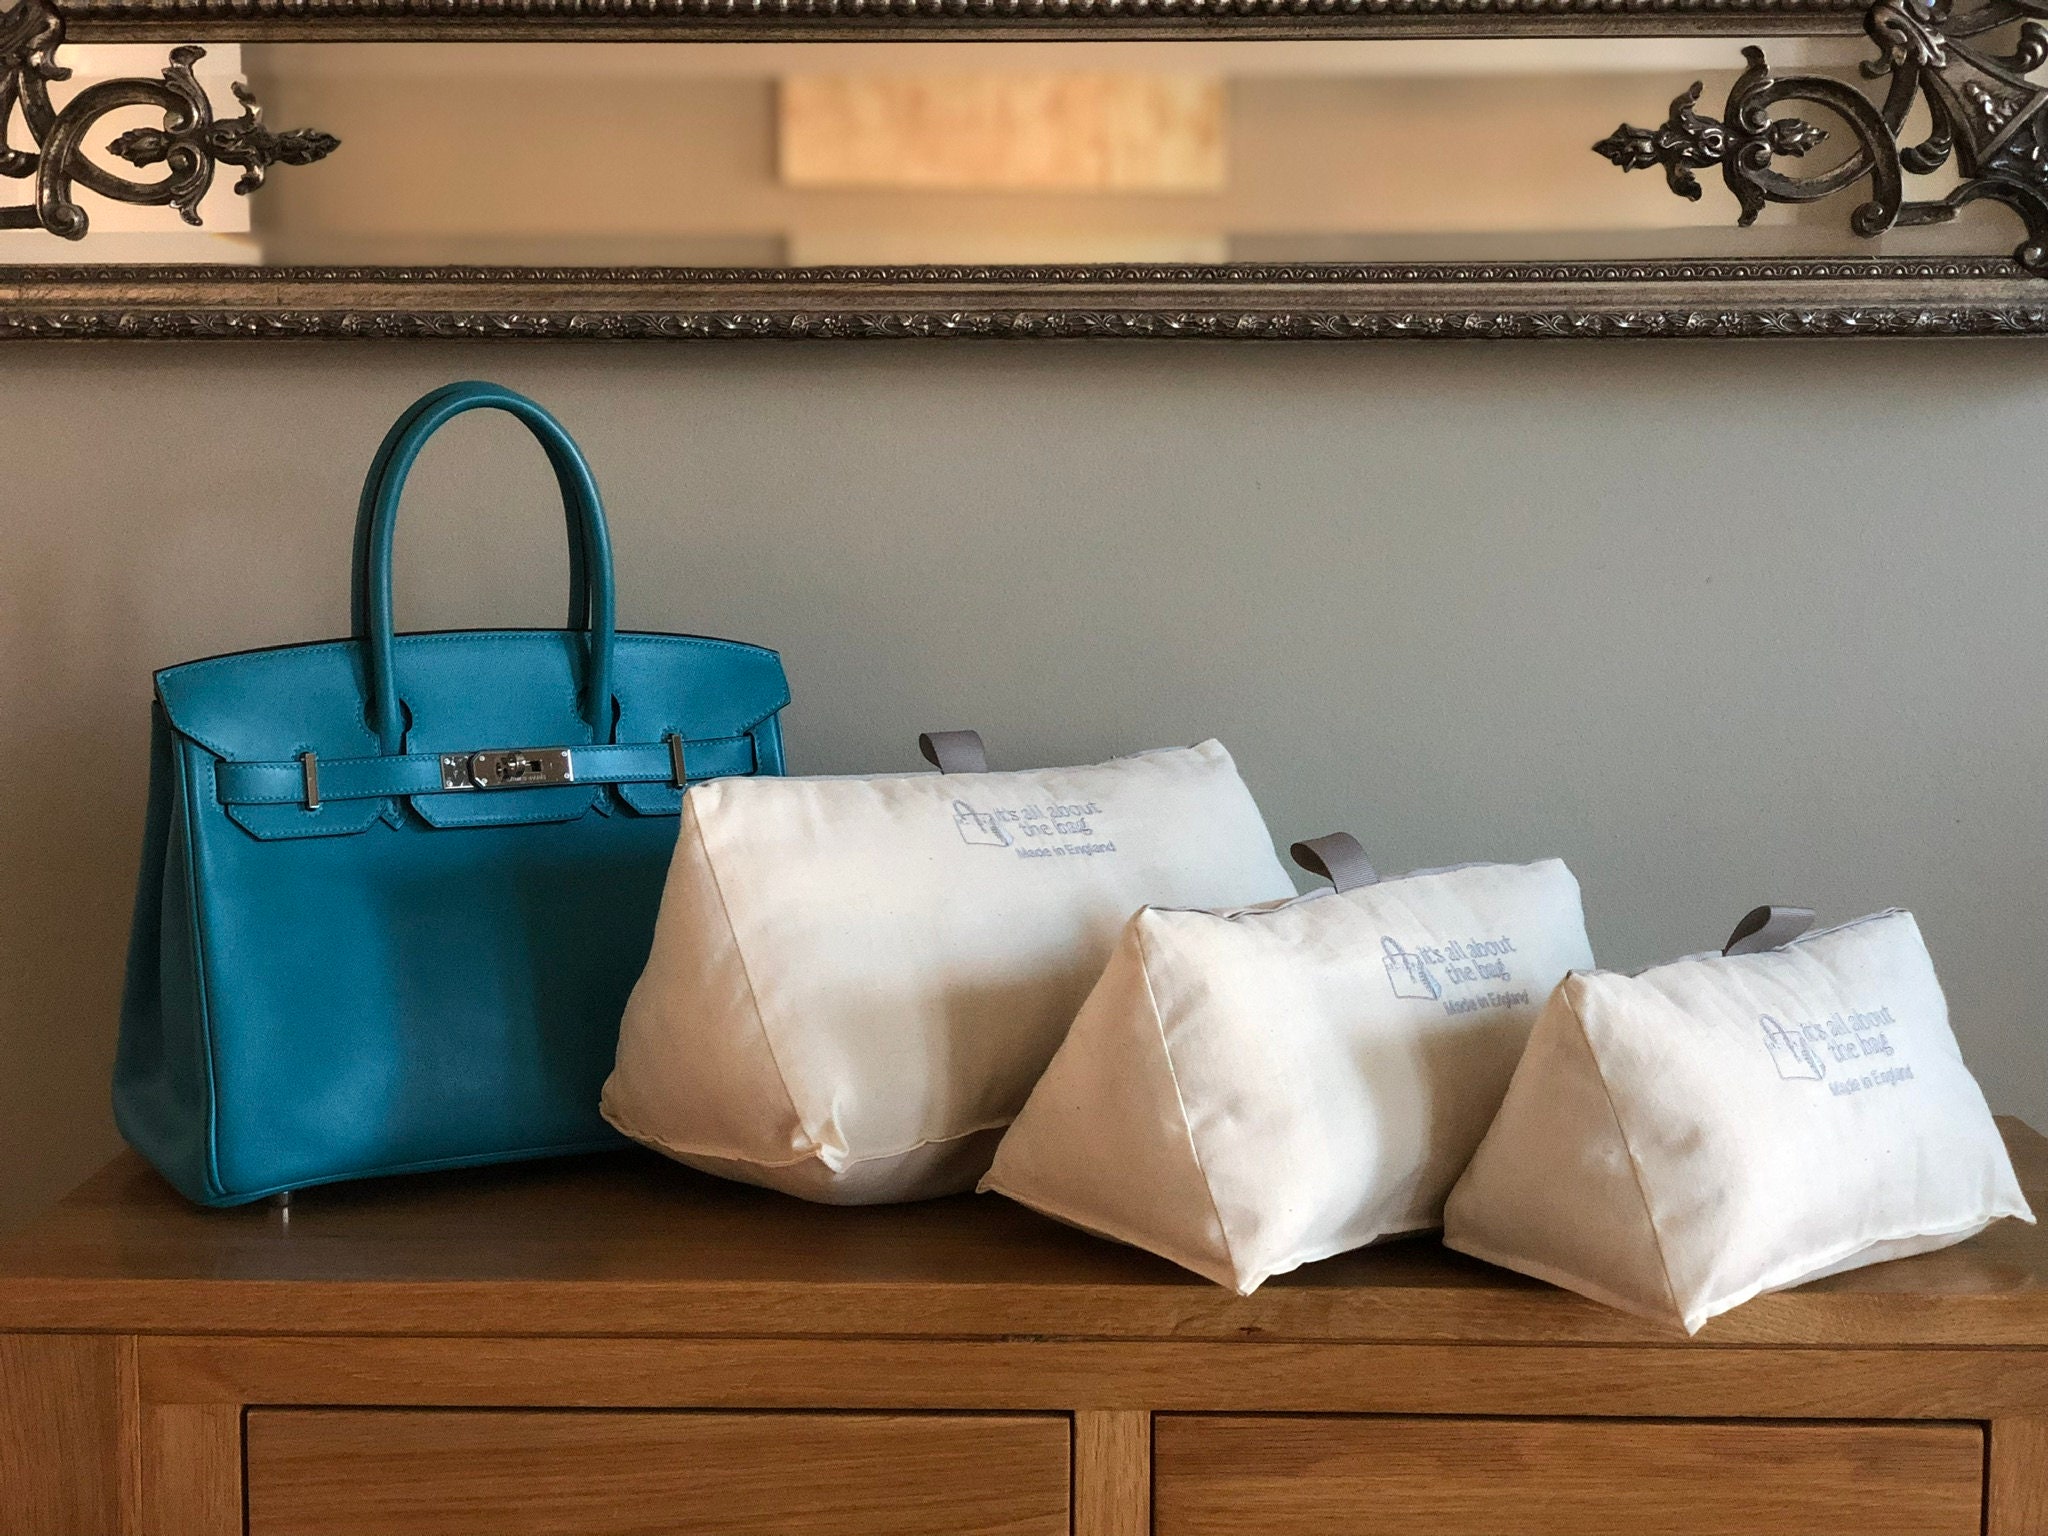 Bag-a-Vie Handbag Shaper Pillow – Luxury Handbag Shaper & Purse Shapers -  [Tres Mini] 7” x 4.5” - Fits Mini Flap and Clutches - Champagne - Yahoo  Shopping